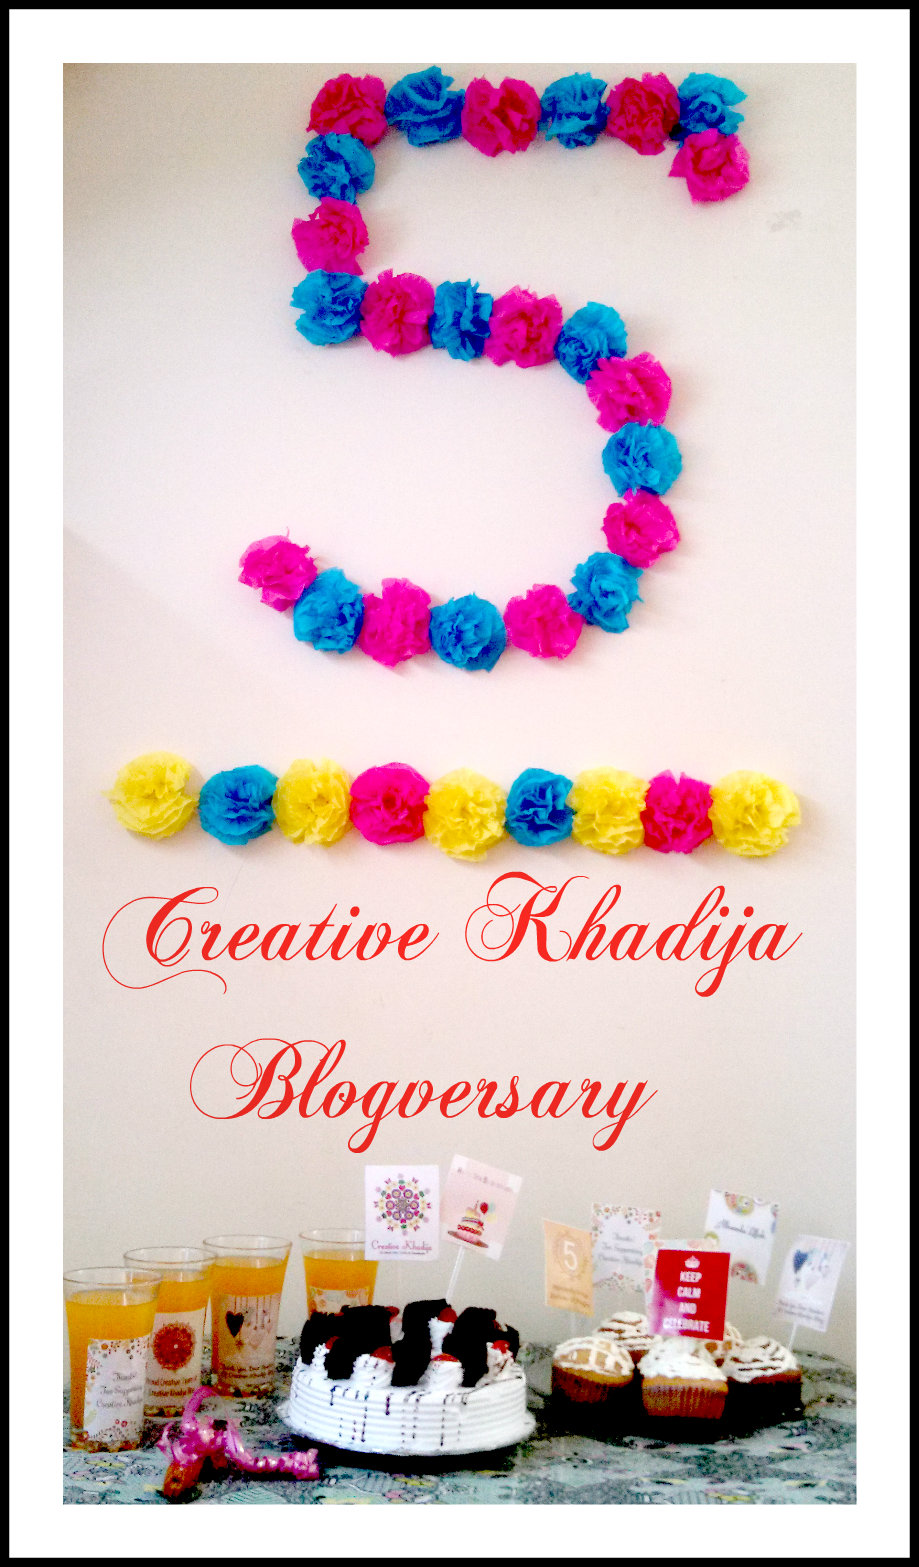 creativekhadija-blog-birthday-blogversary-celebration